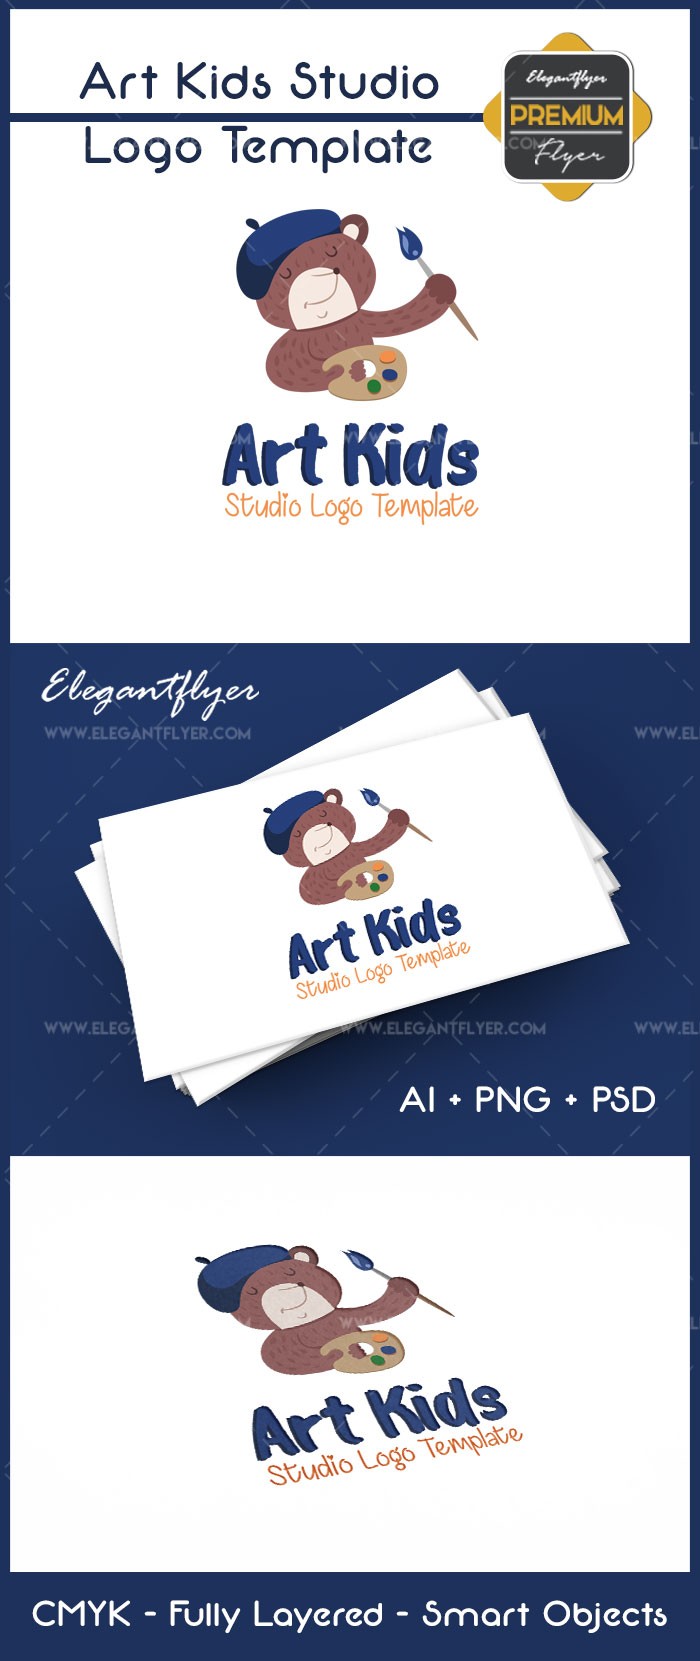 Art Kids Studio by ElegantFlyer